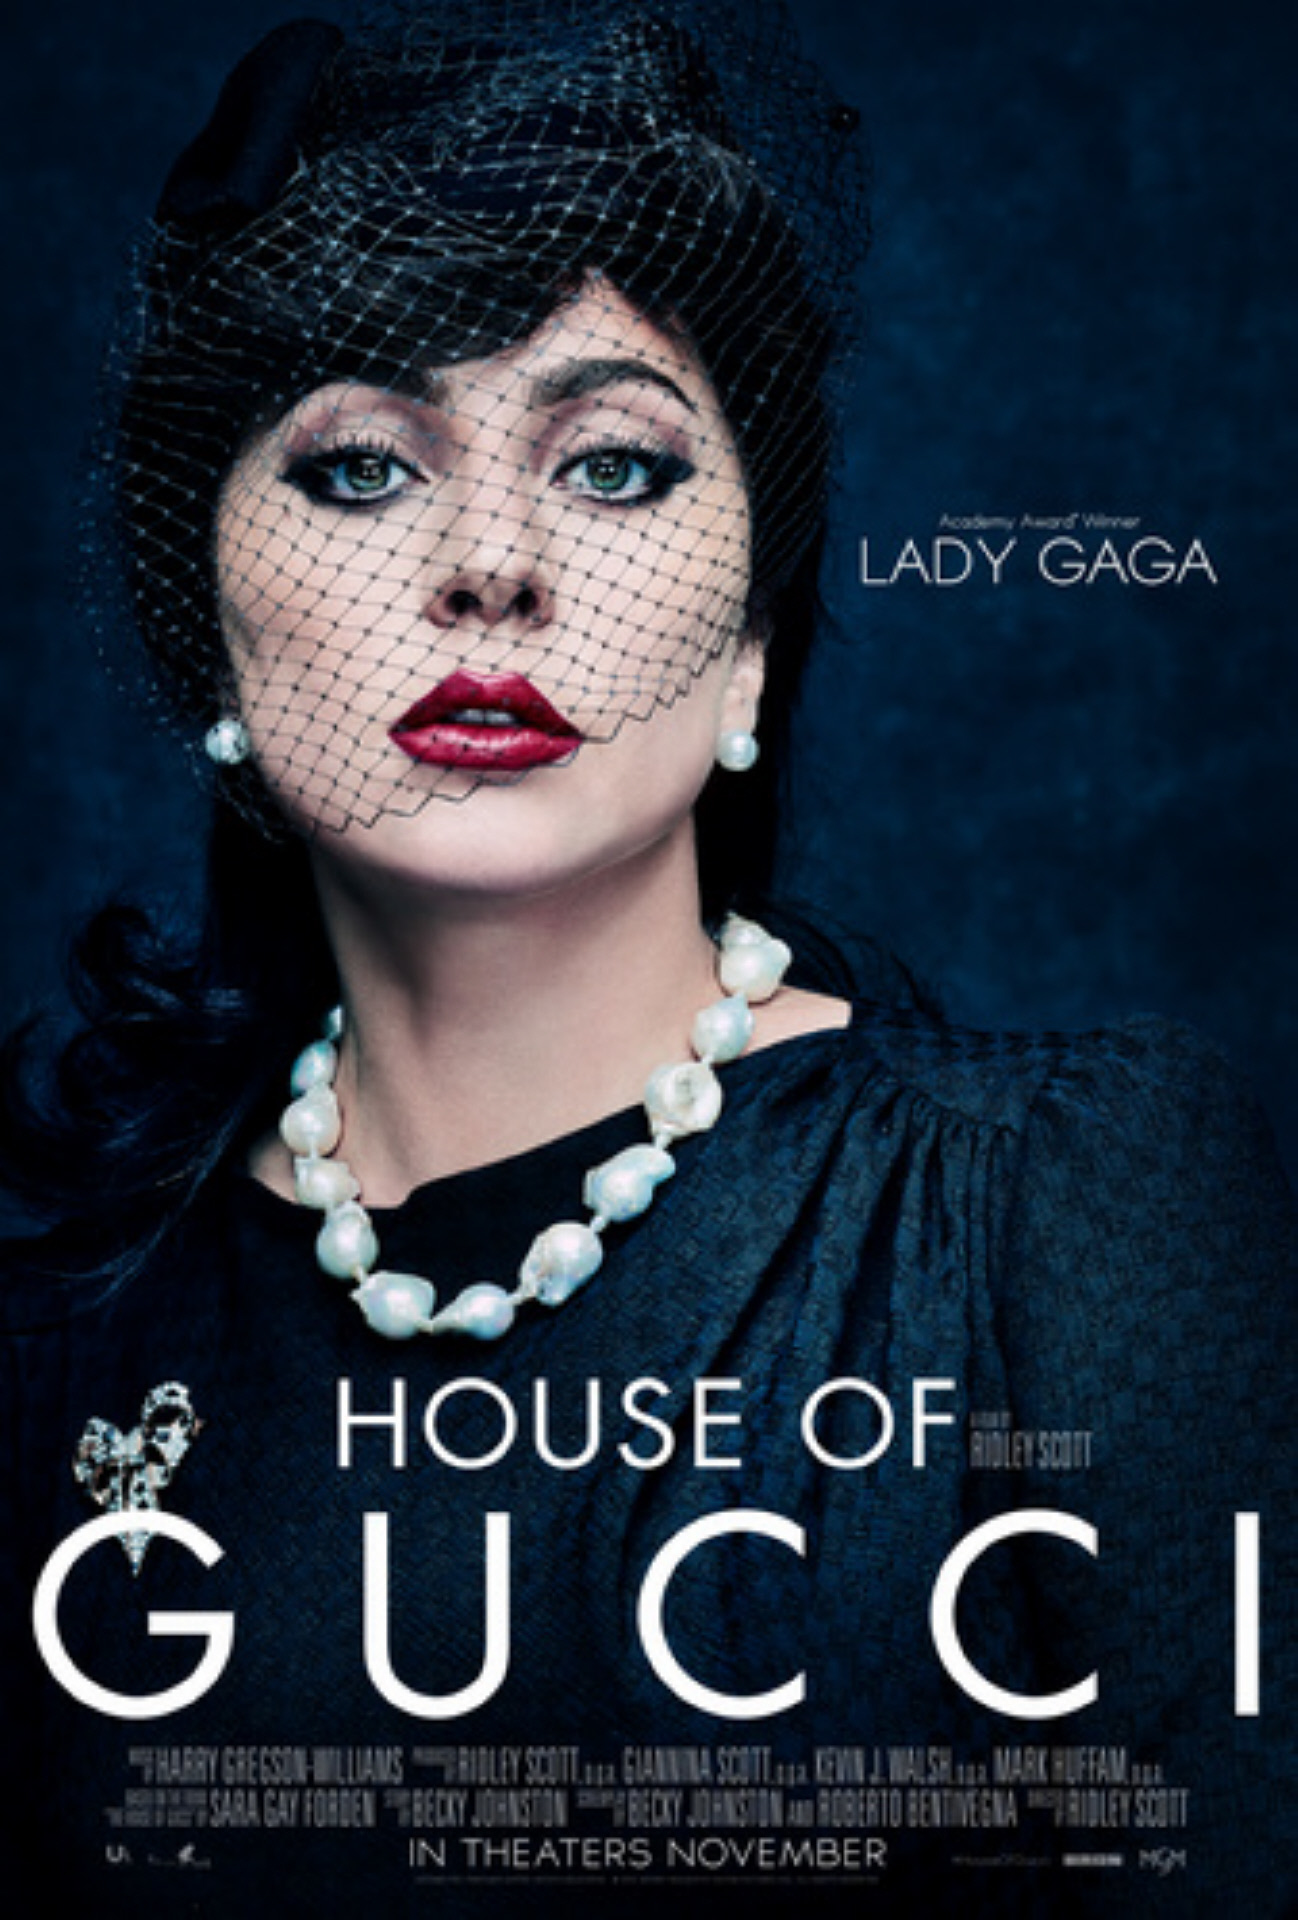 Cartel de la película "House of Gucci"